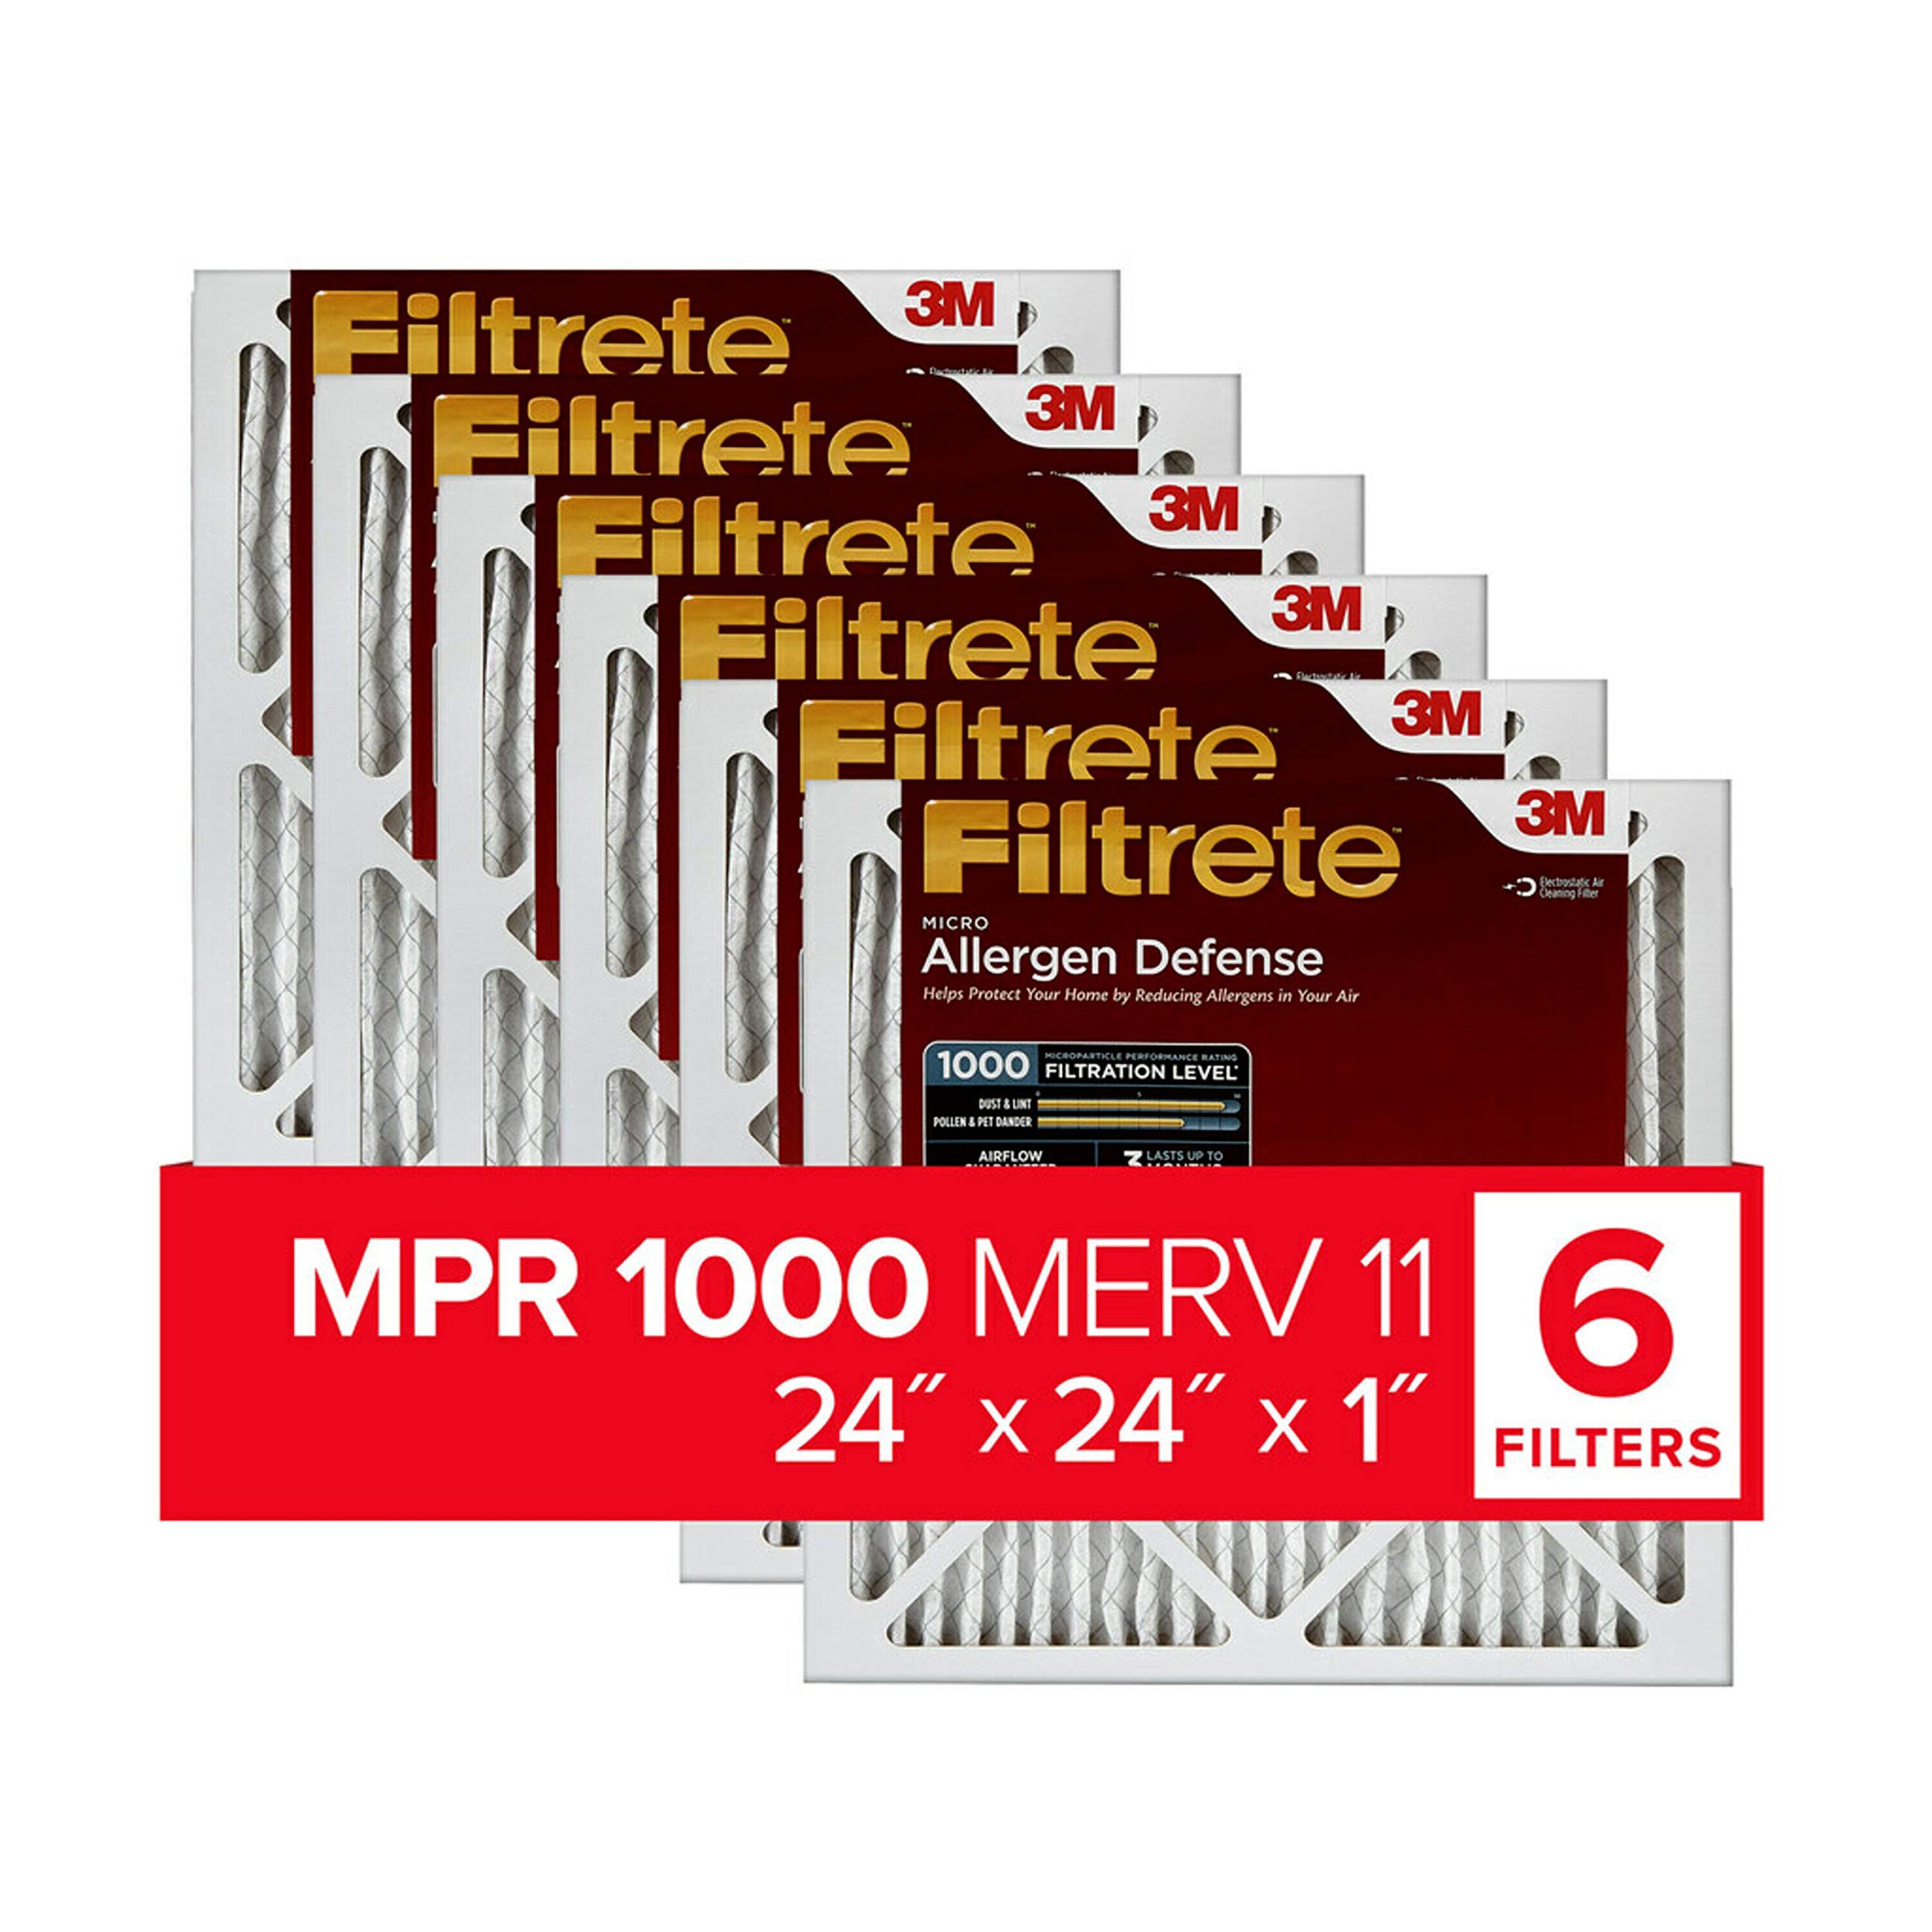 Filtrete 24x24x1 空气过滤器 MPR 1000 MERV 11，过敏原防御，6 件装（精确尺寸 23.81x23.81x0.81）